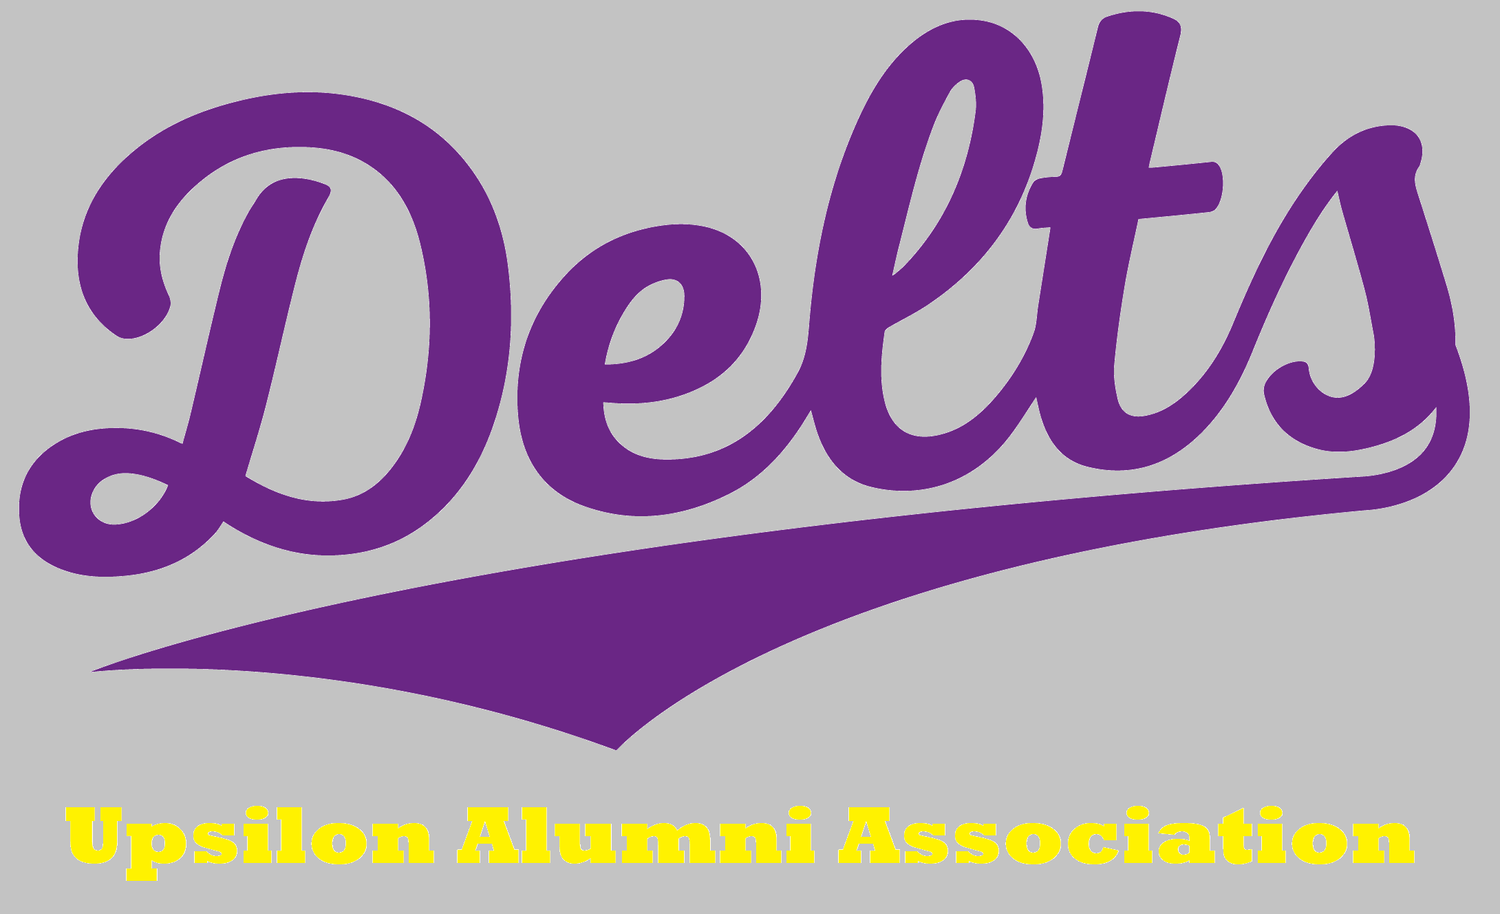 Upsilson Delts Alumni Association